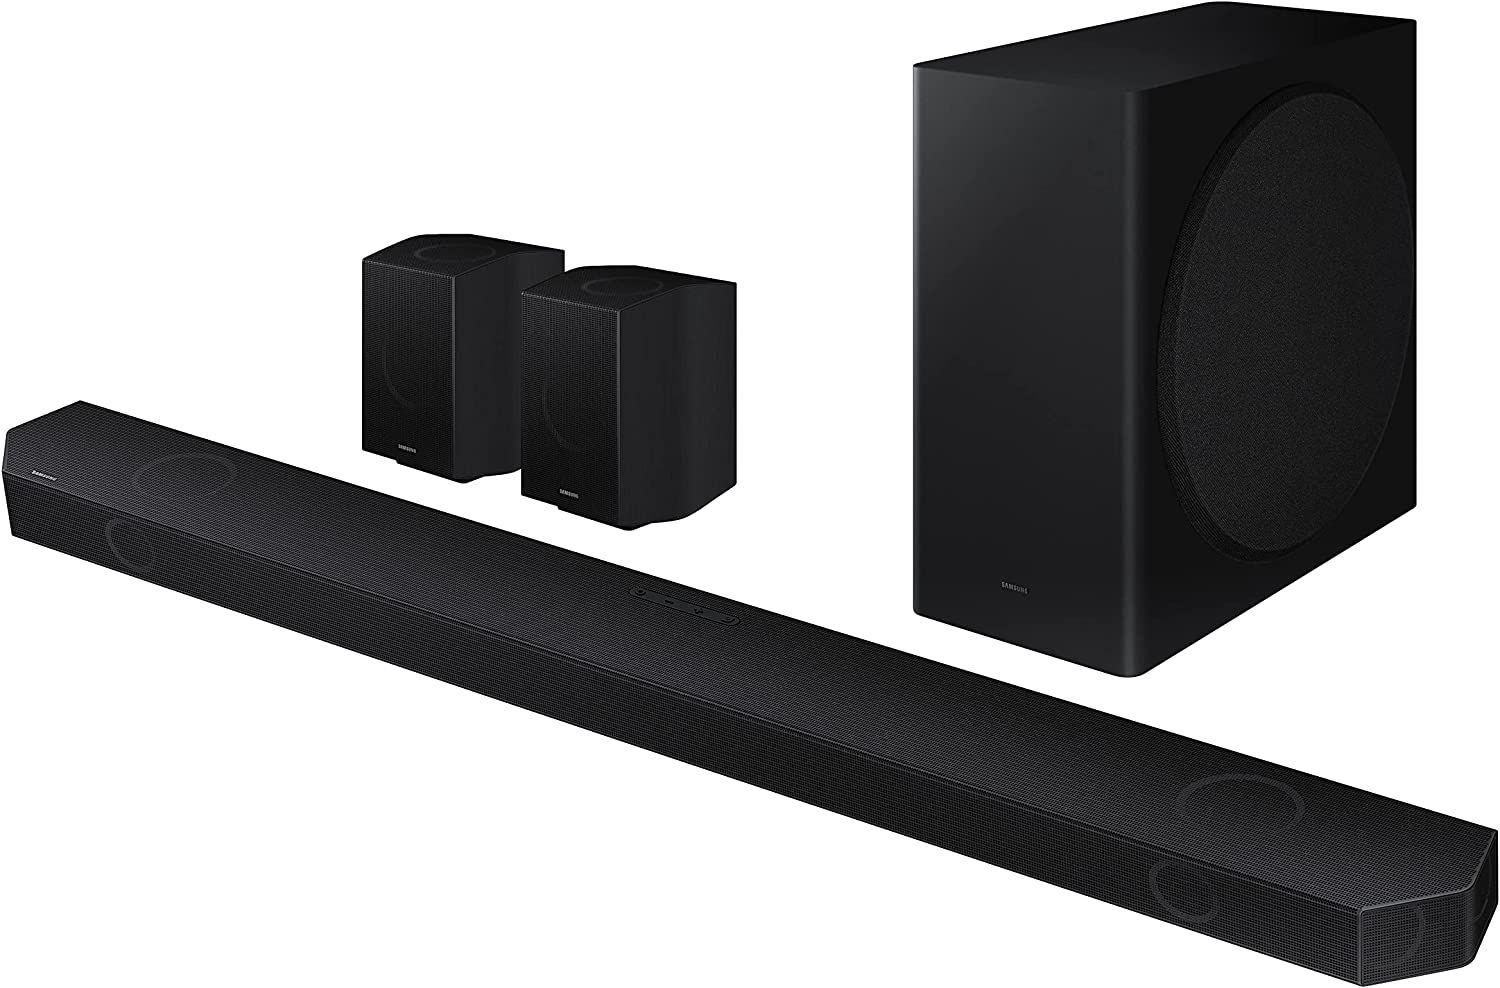 Samsung Q930C product image of a long black soundbar alongside two black speakers and a subwoofer.